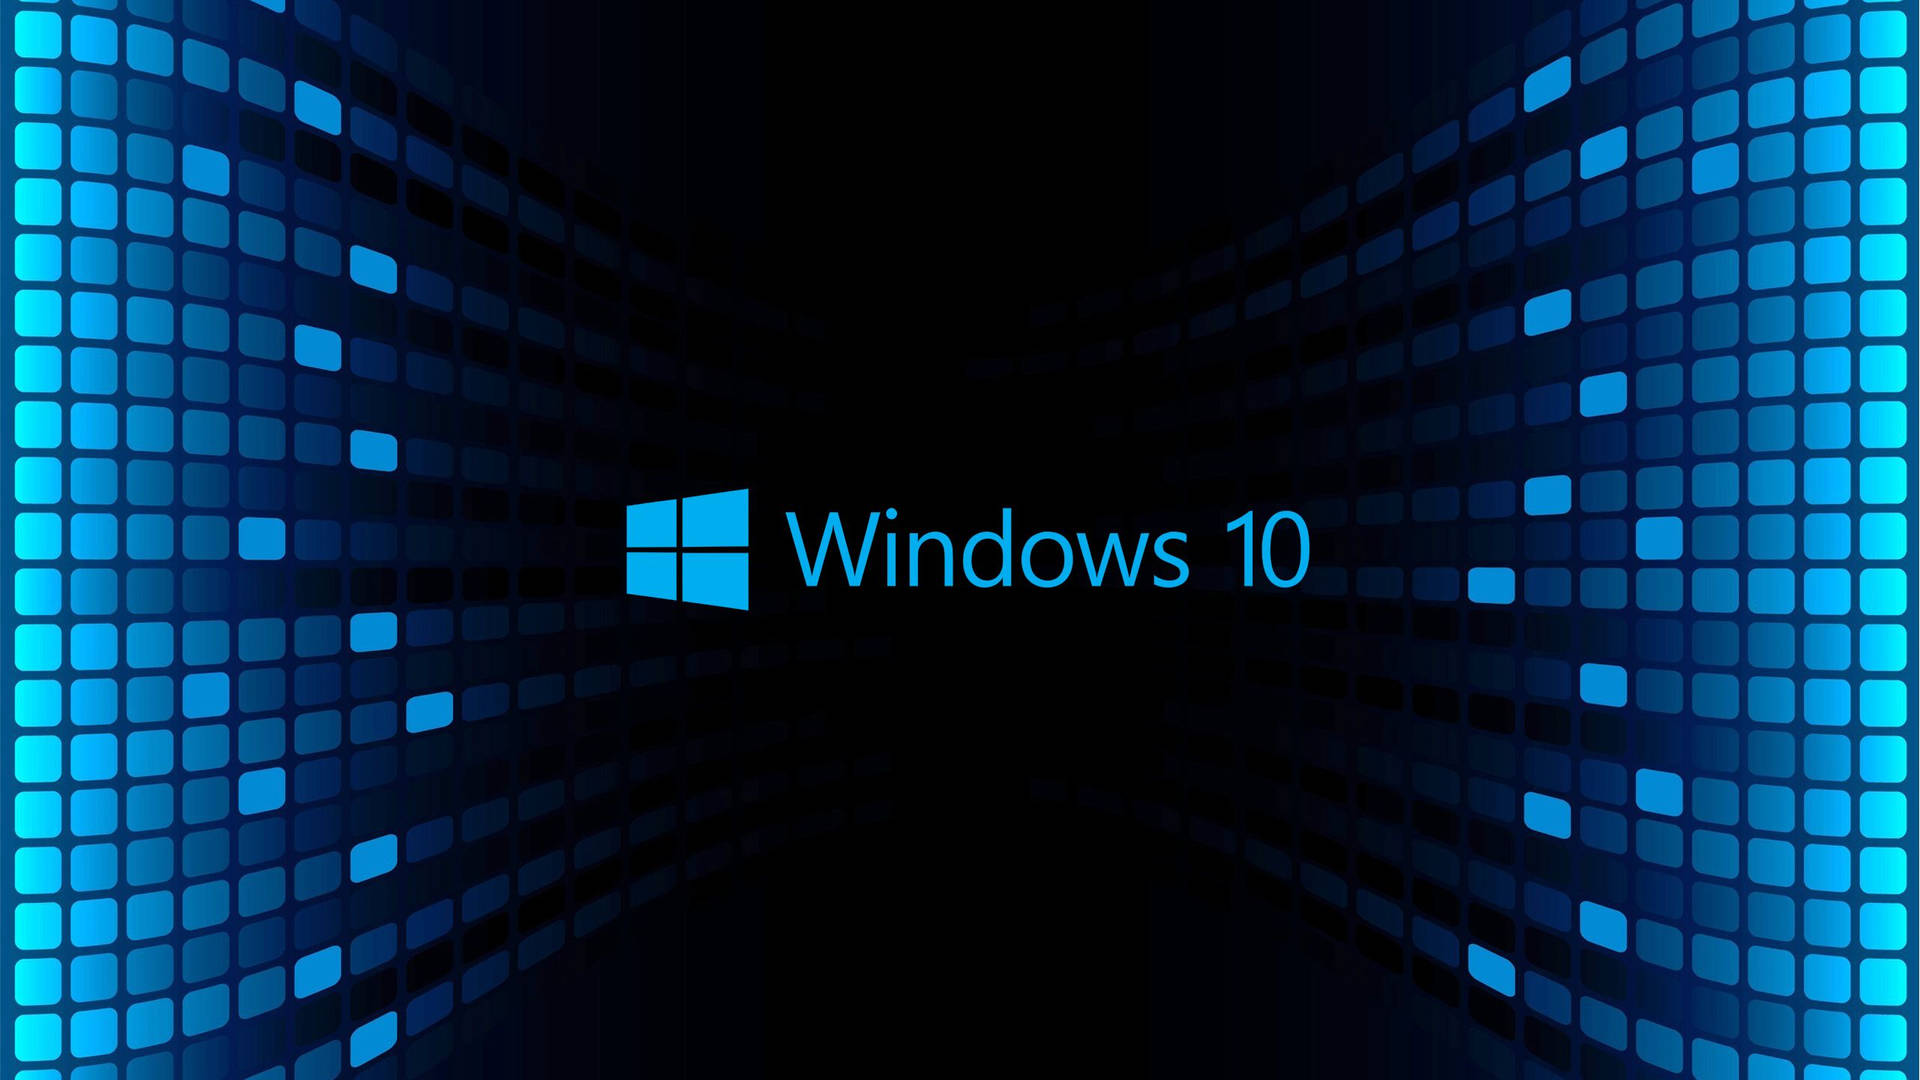 Windows 10 Hd Blue Squares Background